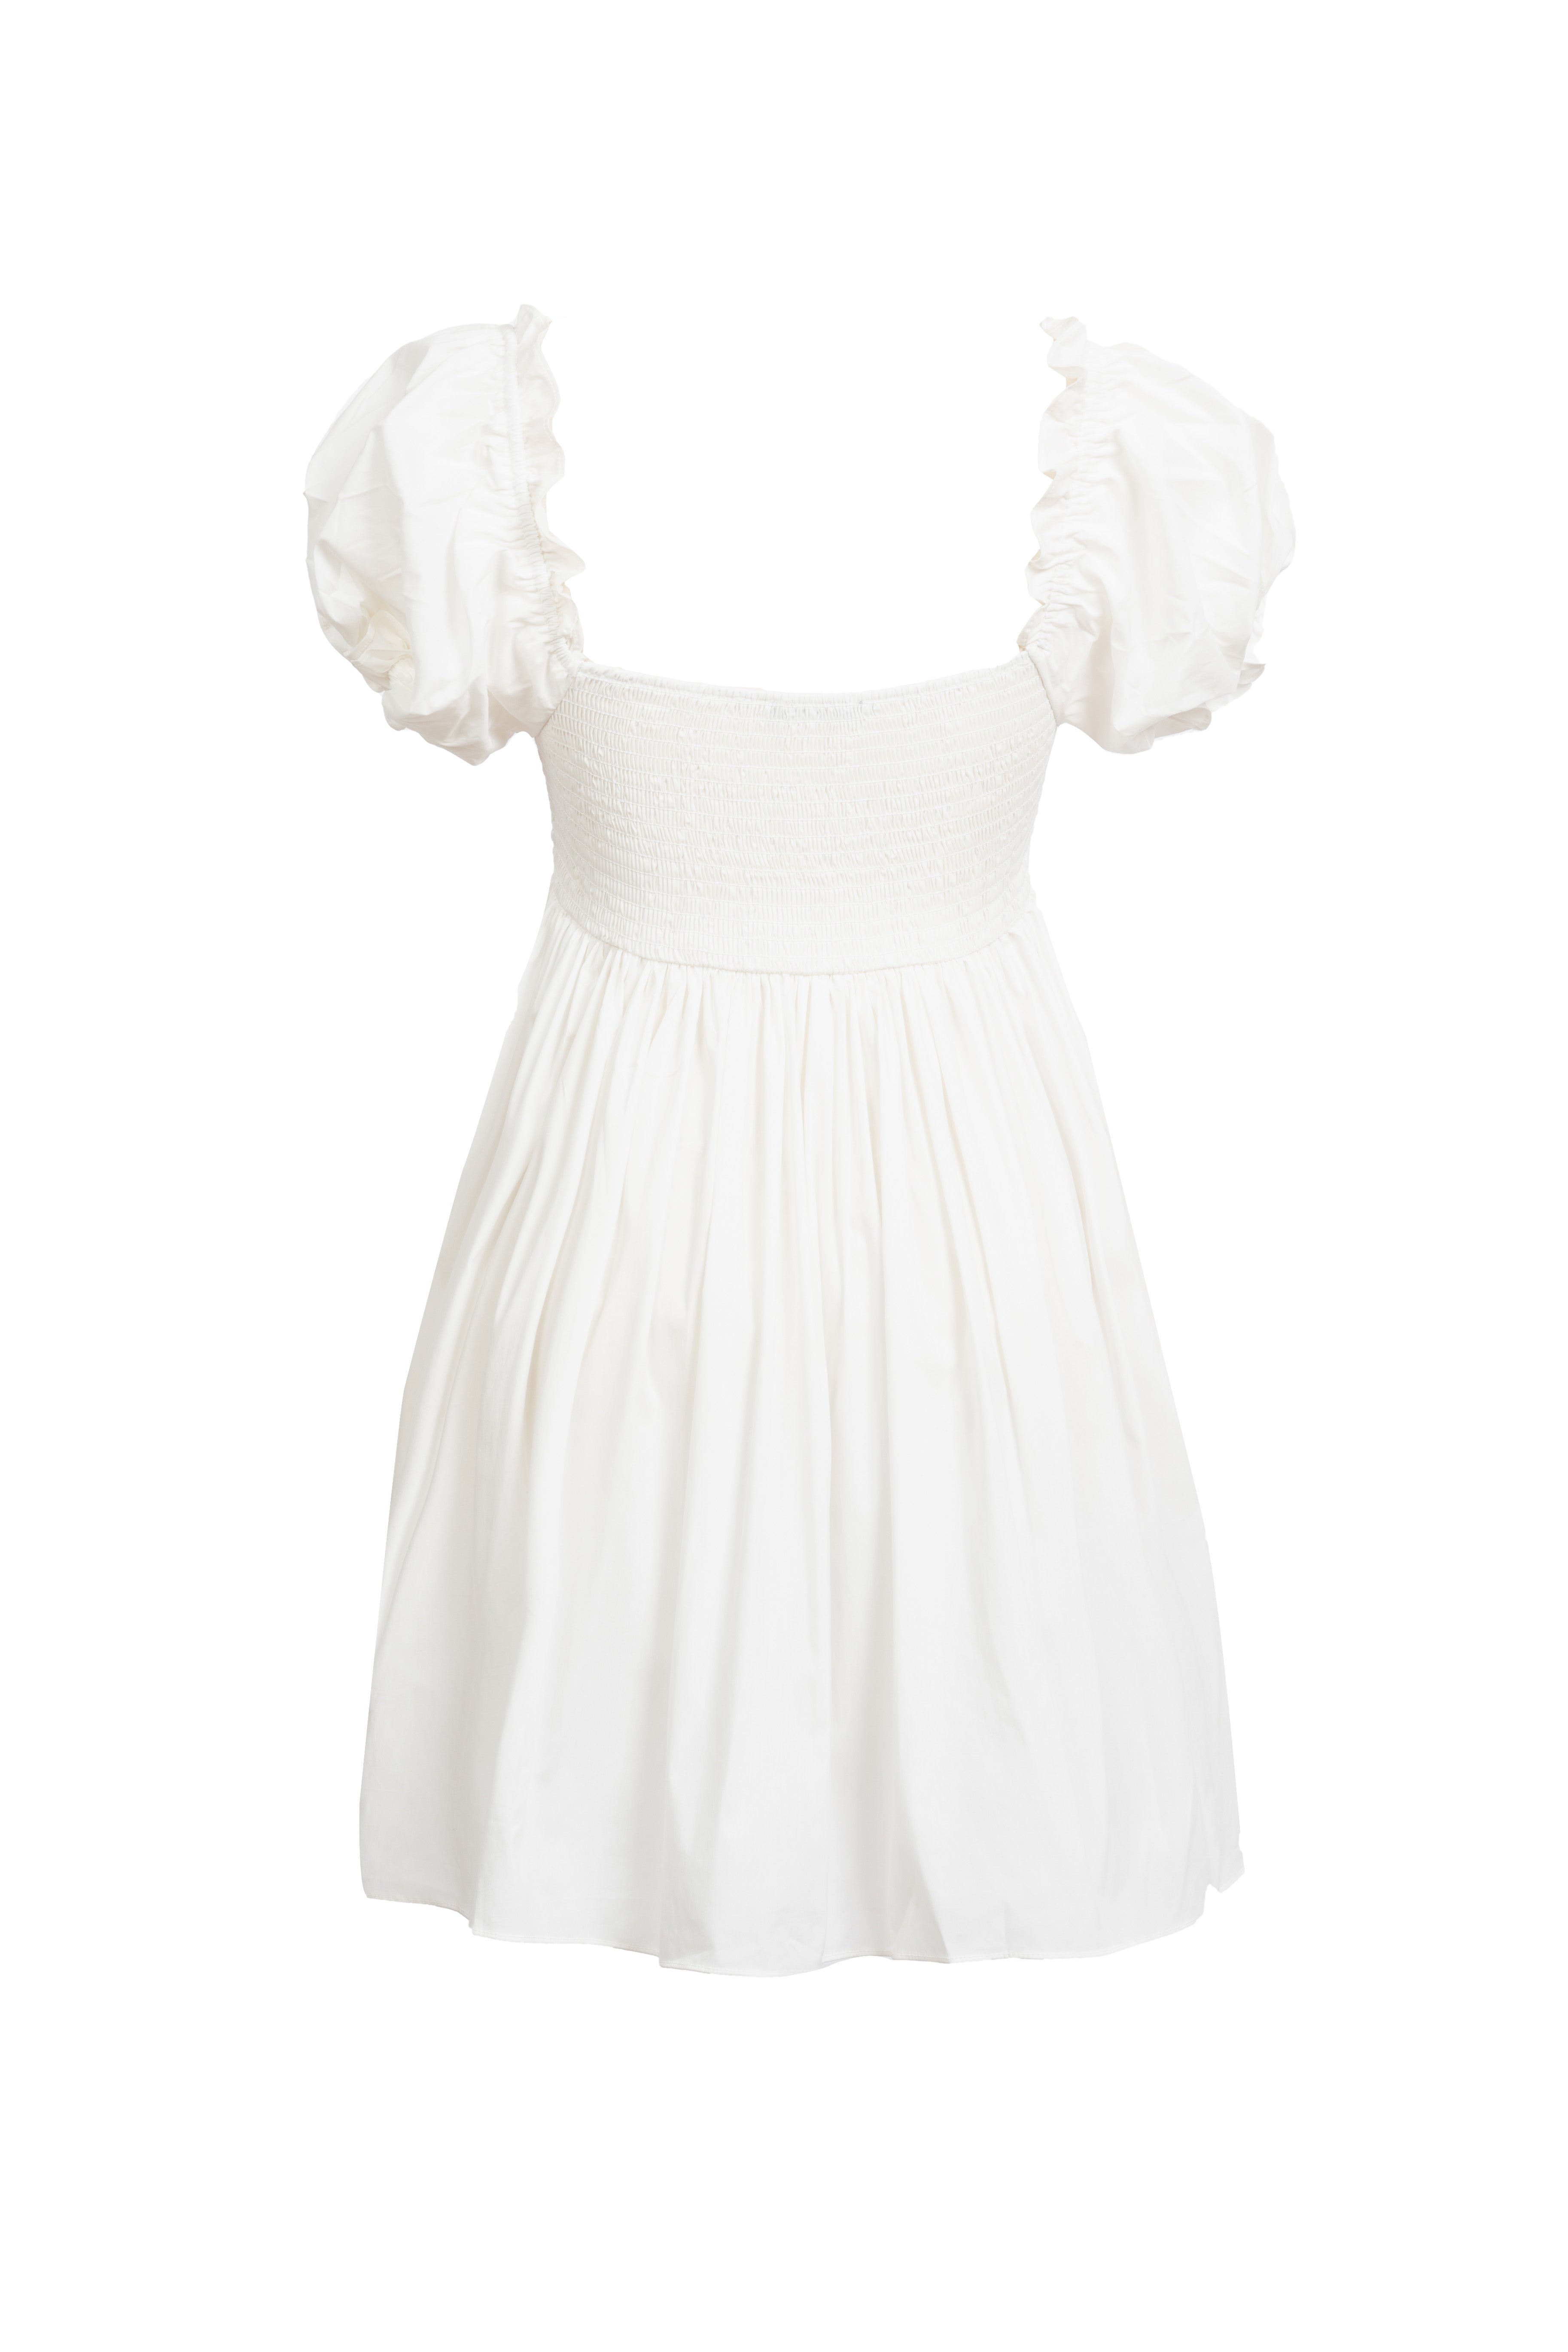 The Winnie Dress - White